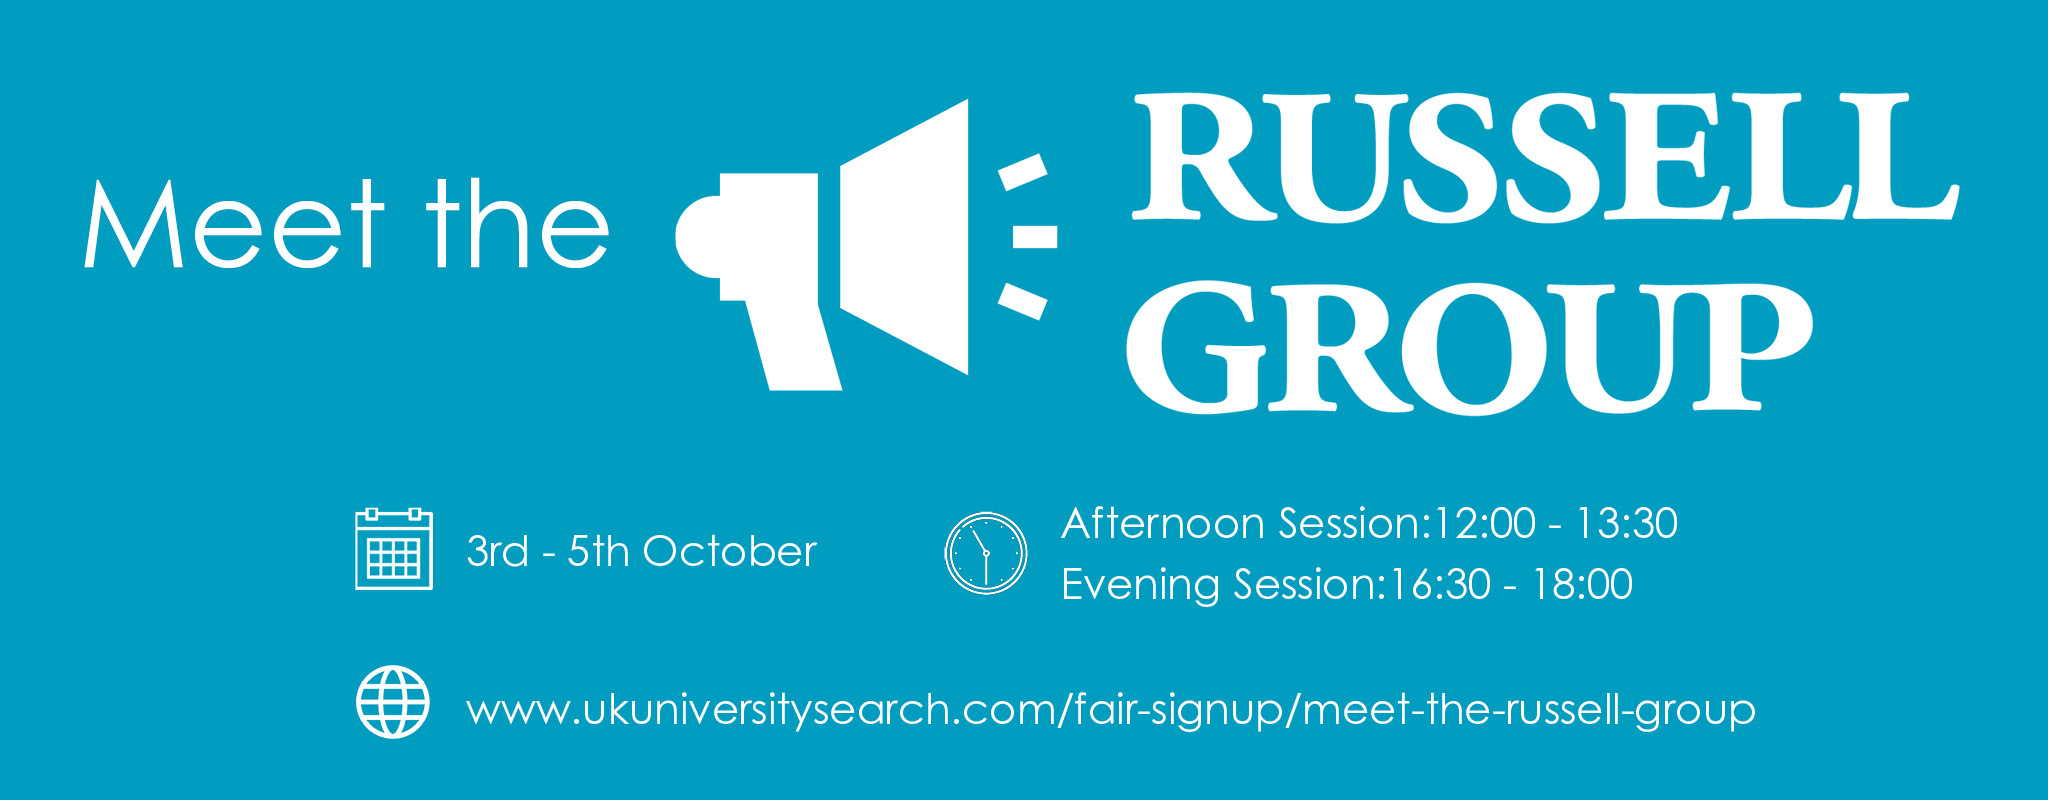 Russell Group Webinars Fair